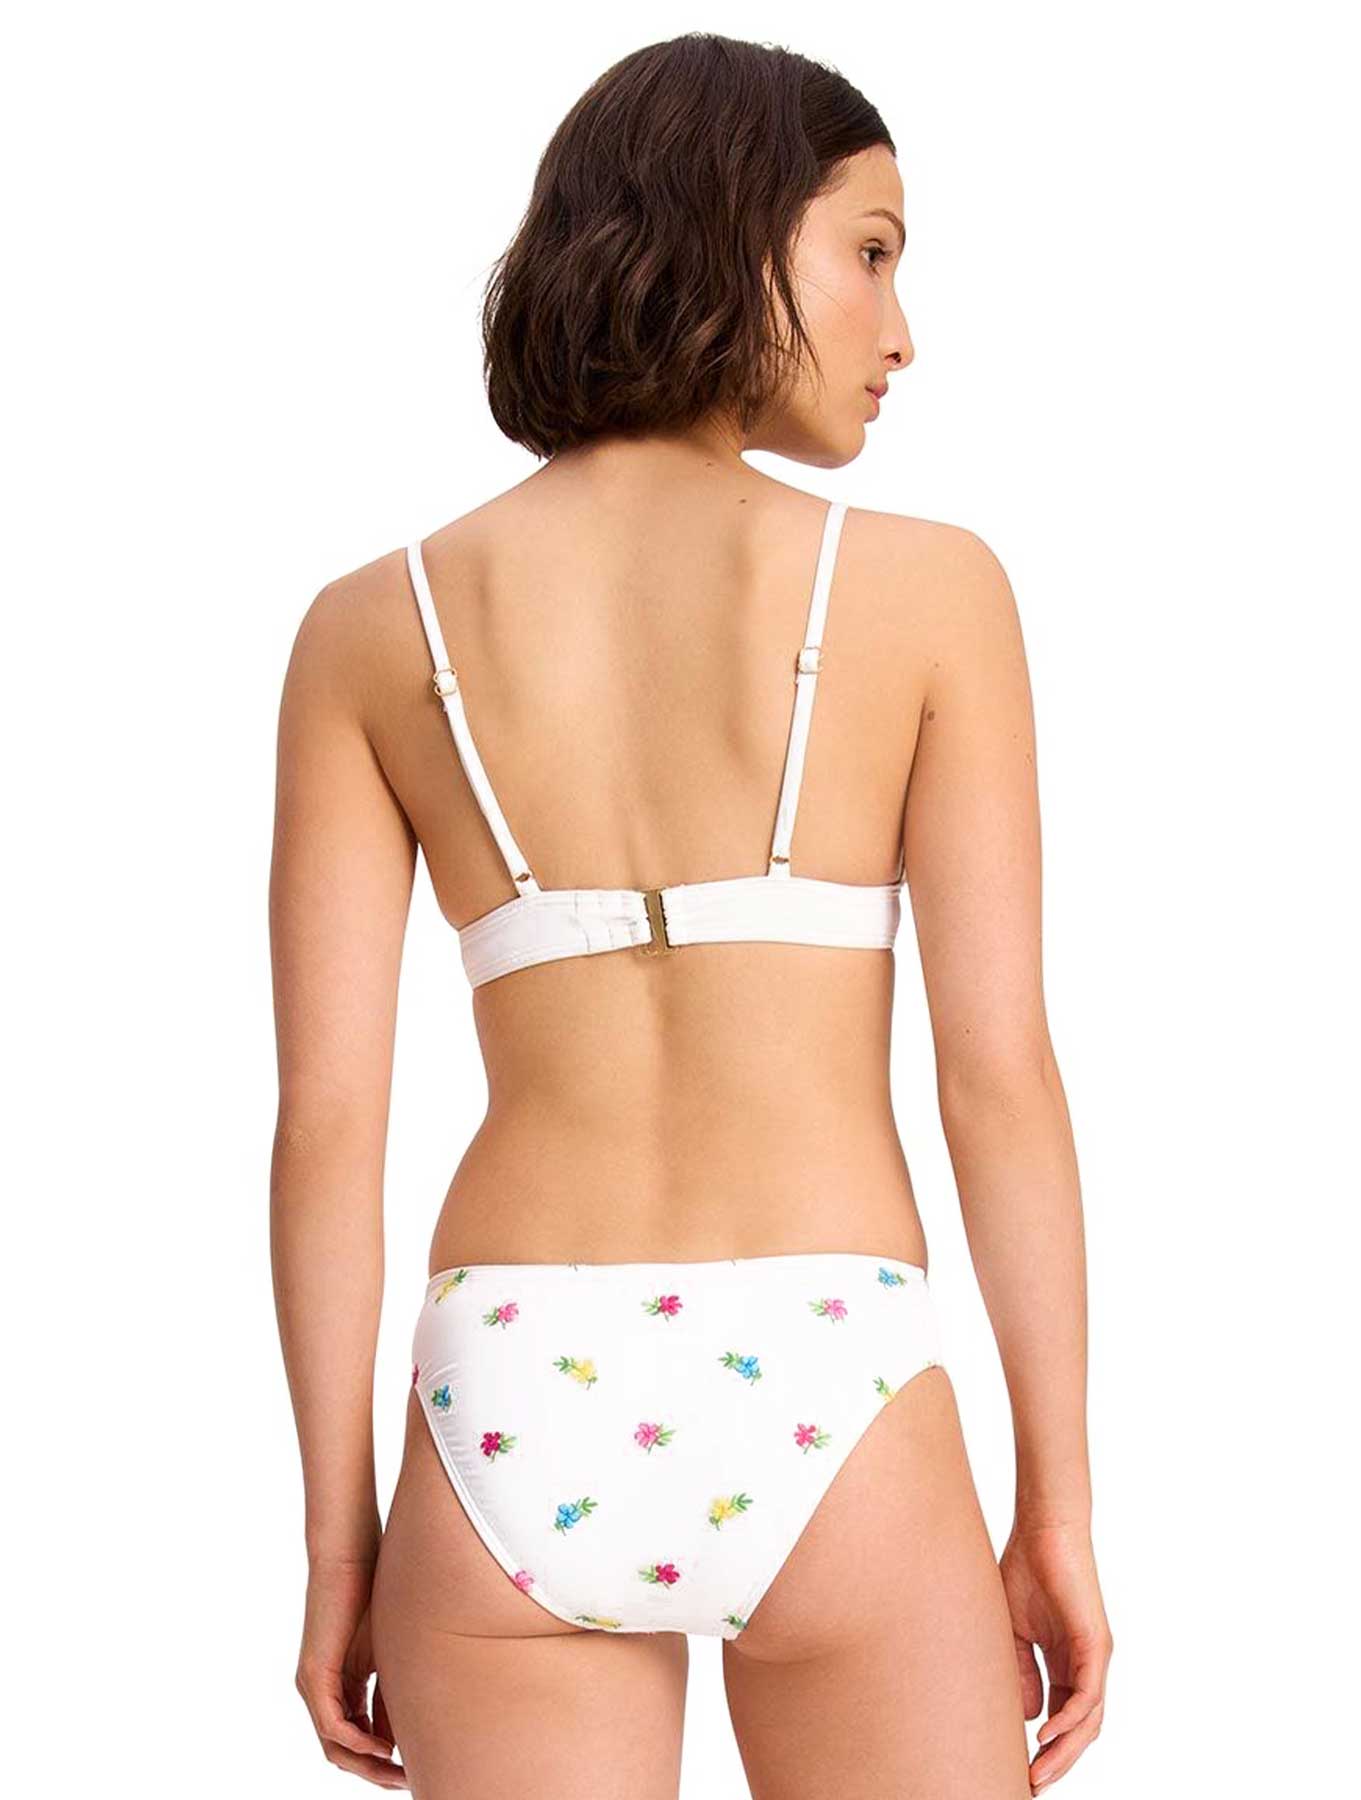 Kate Spade: Sea Garden French Cut Bra Bikini Top